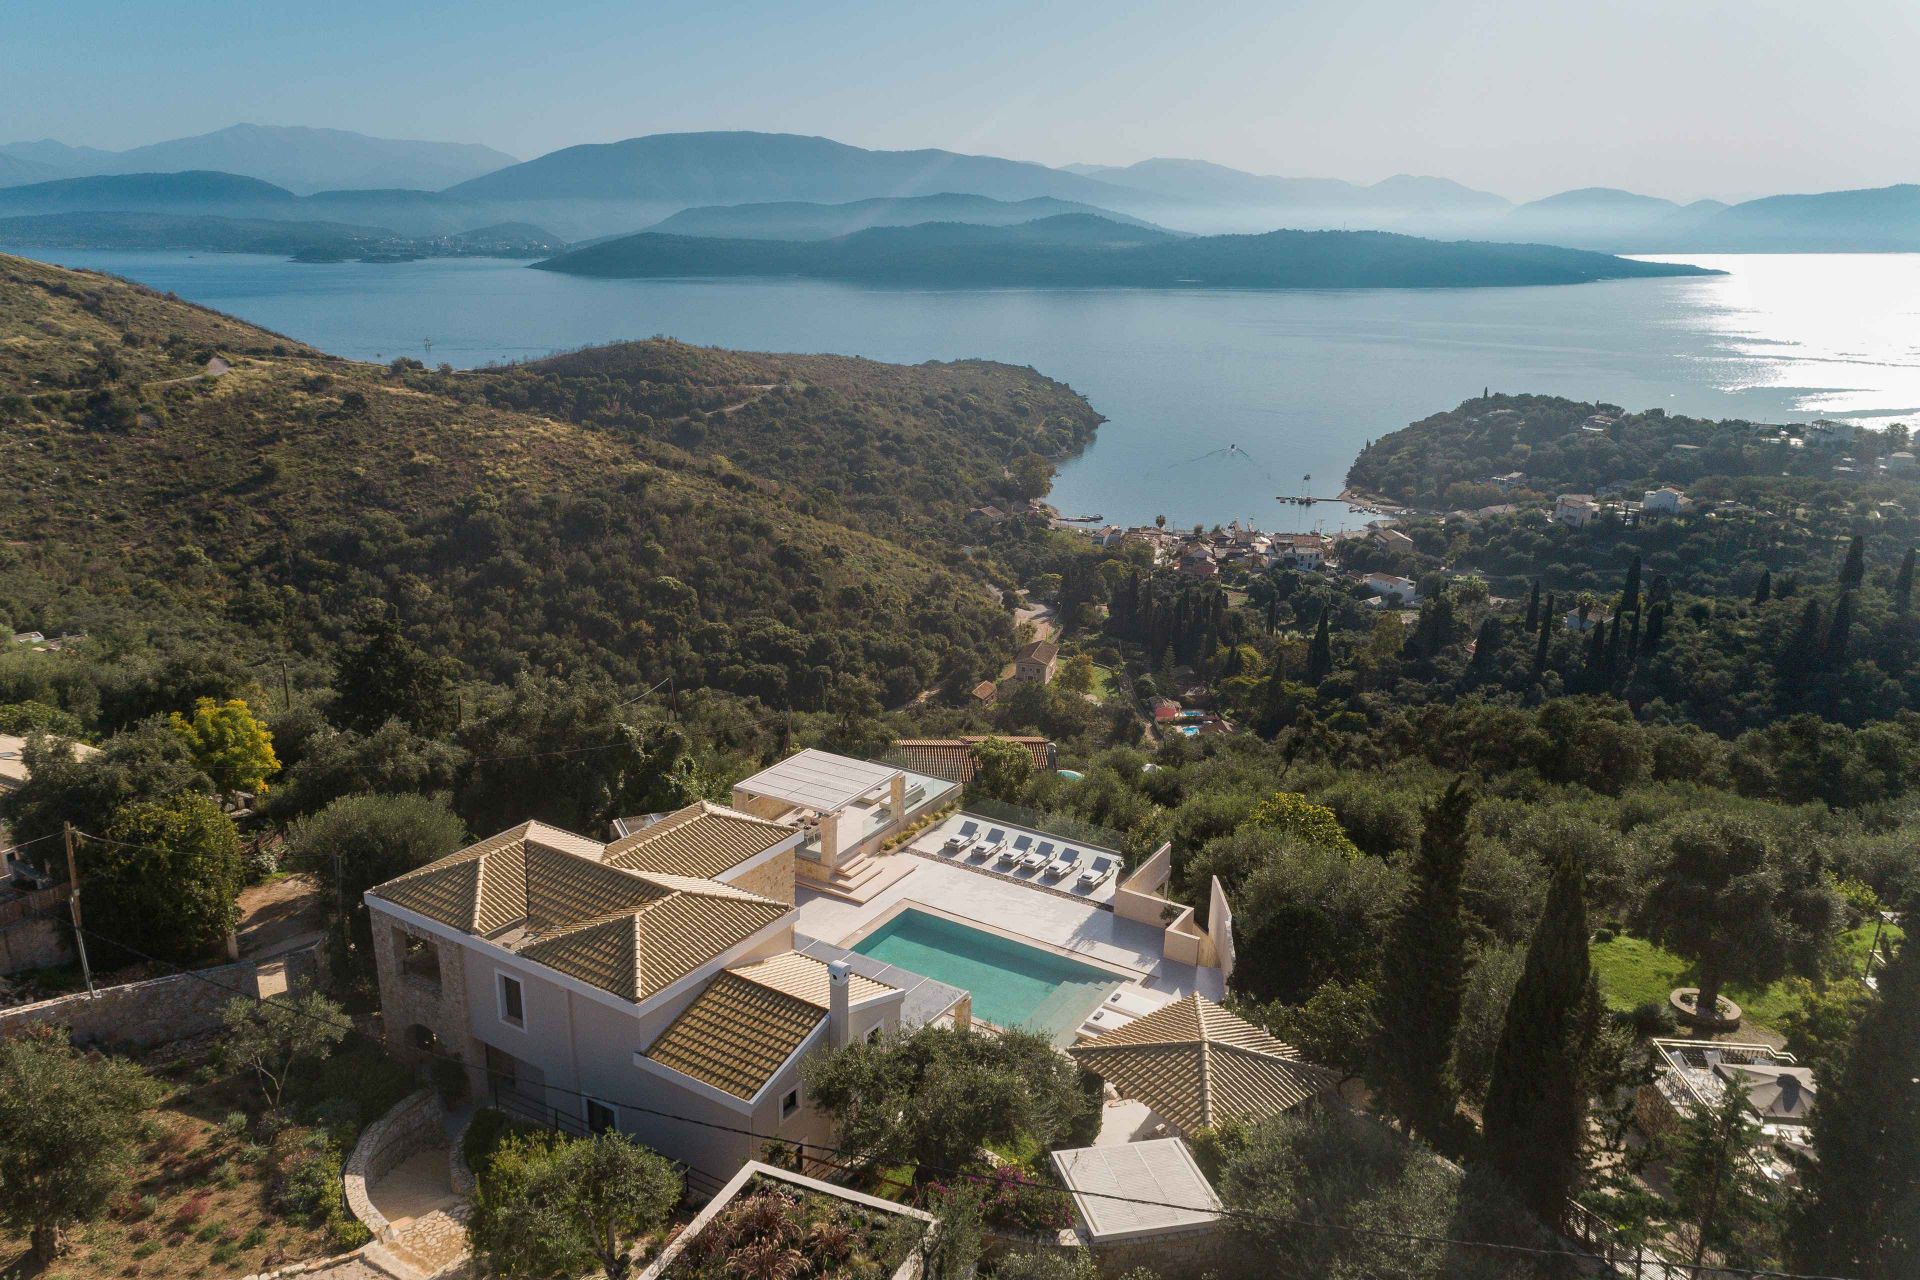 Wedding villas in Greece: 11 of the most romantic villas in the Greek Islands